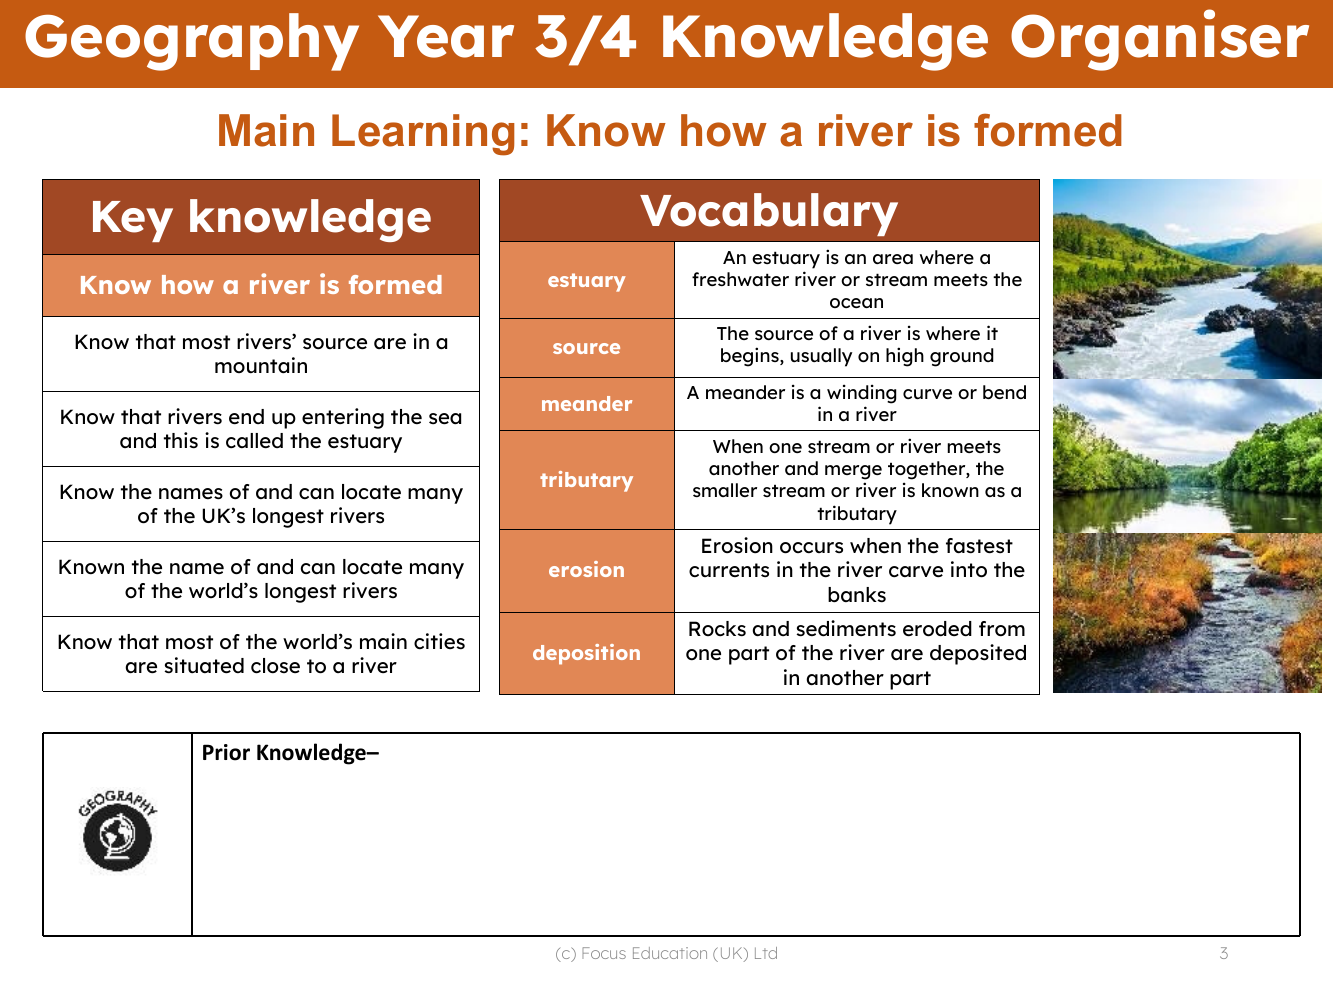 Knowledge organiser - Rivers - Year 3